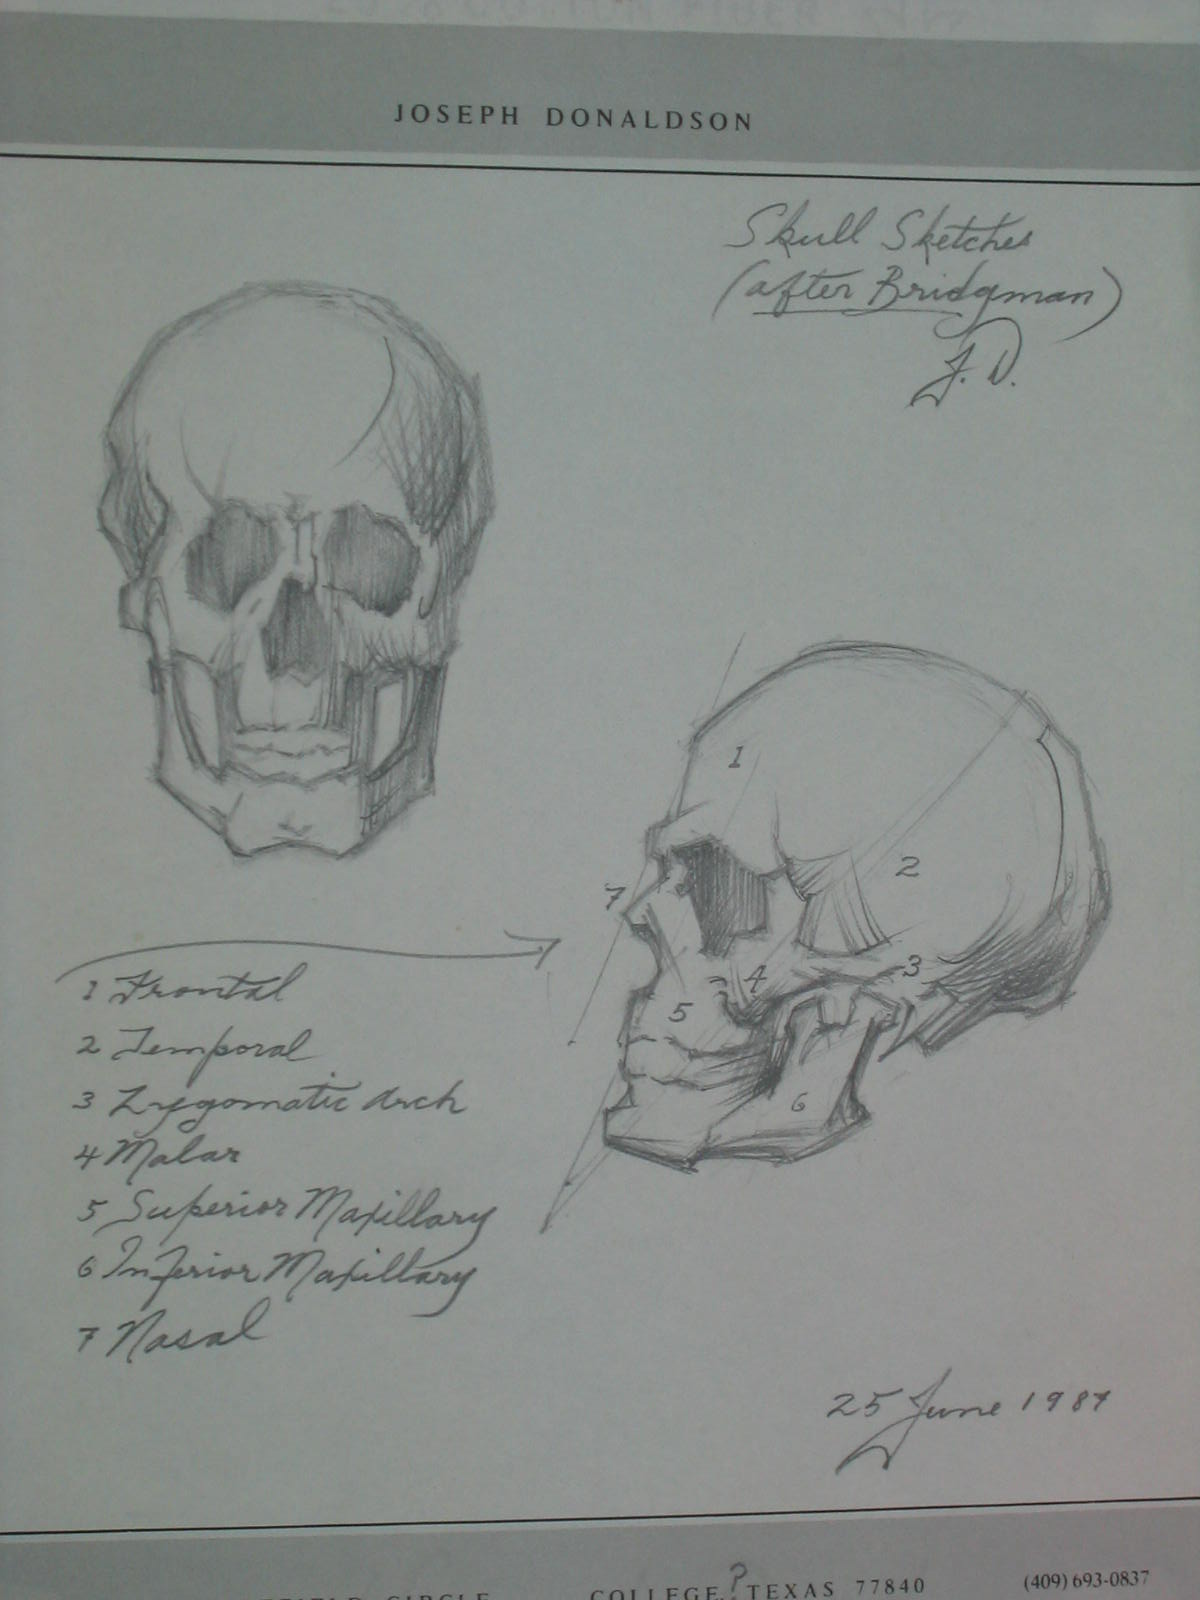 Skull Sketches